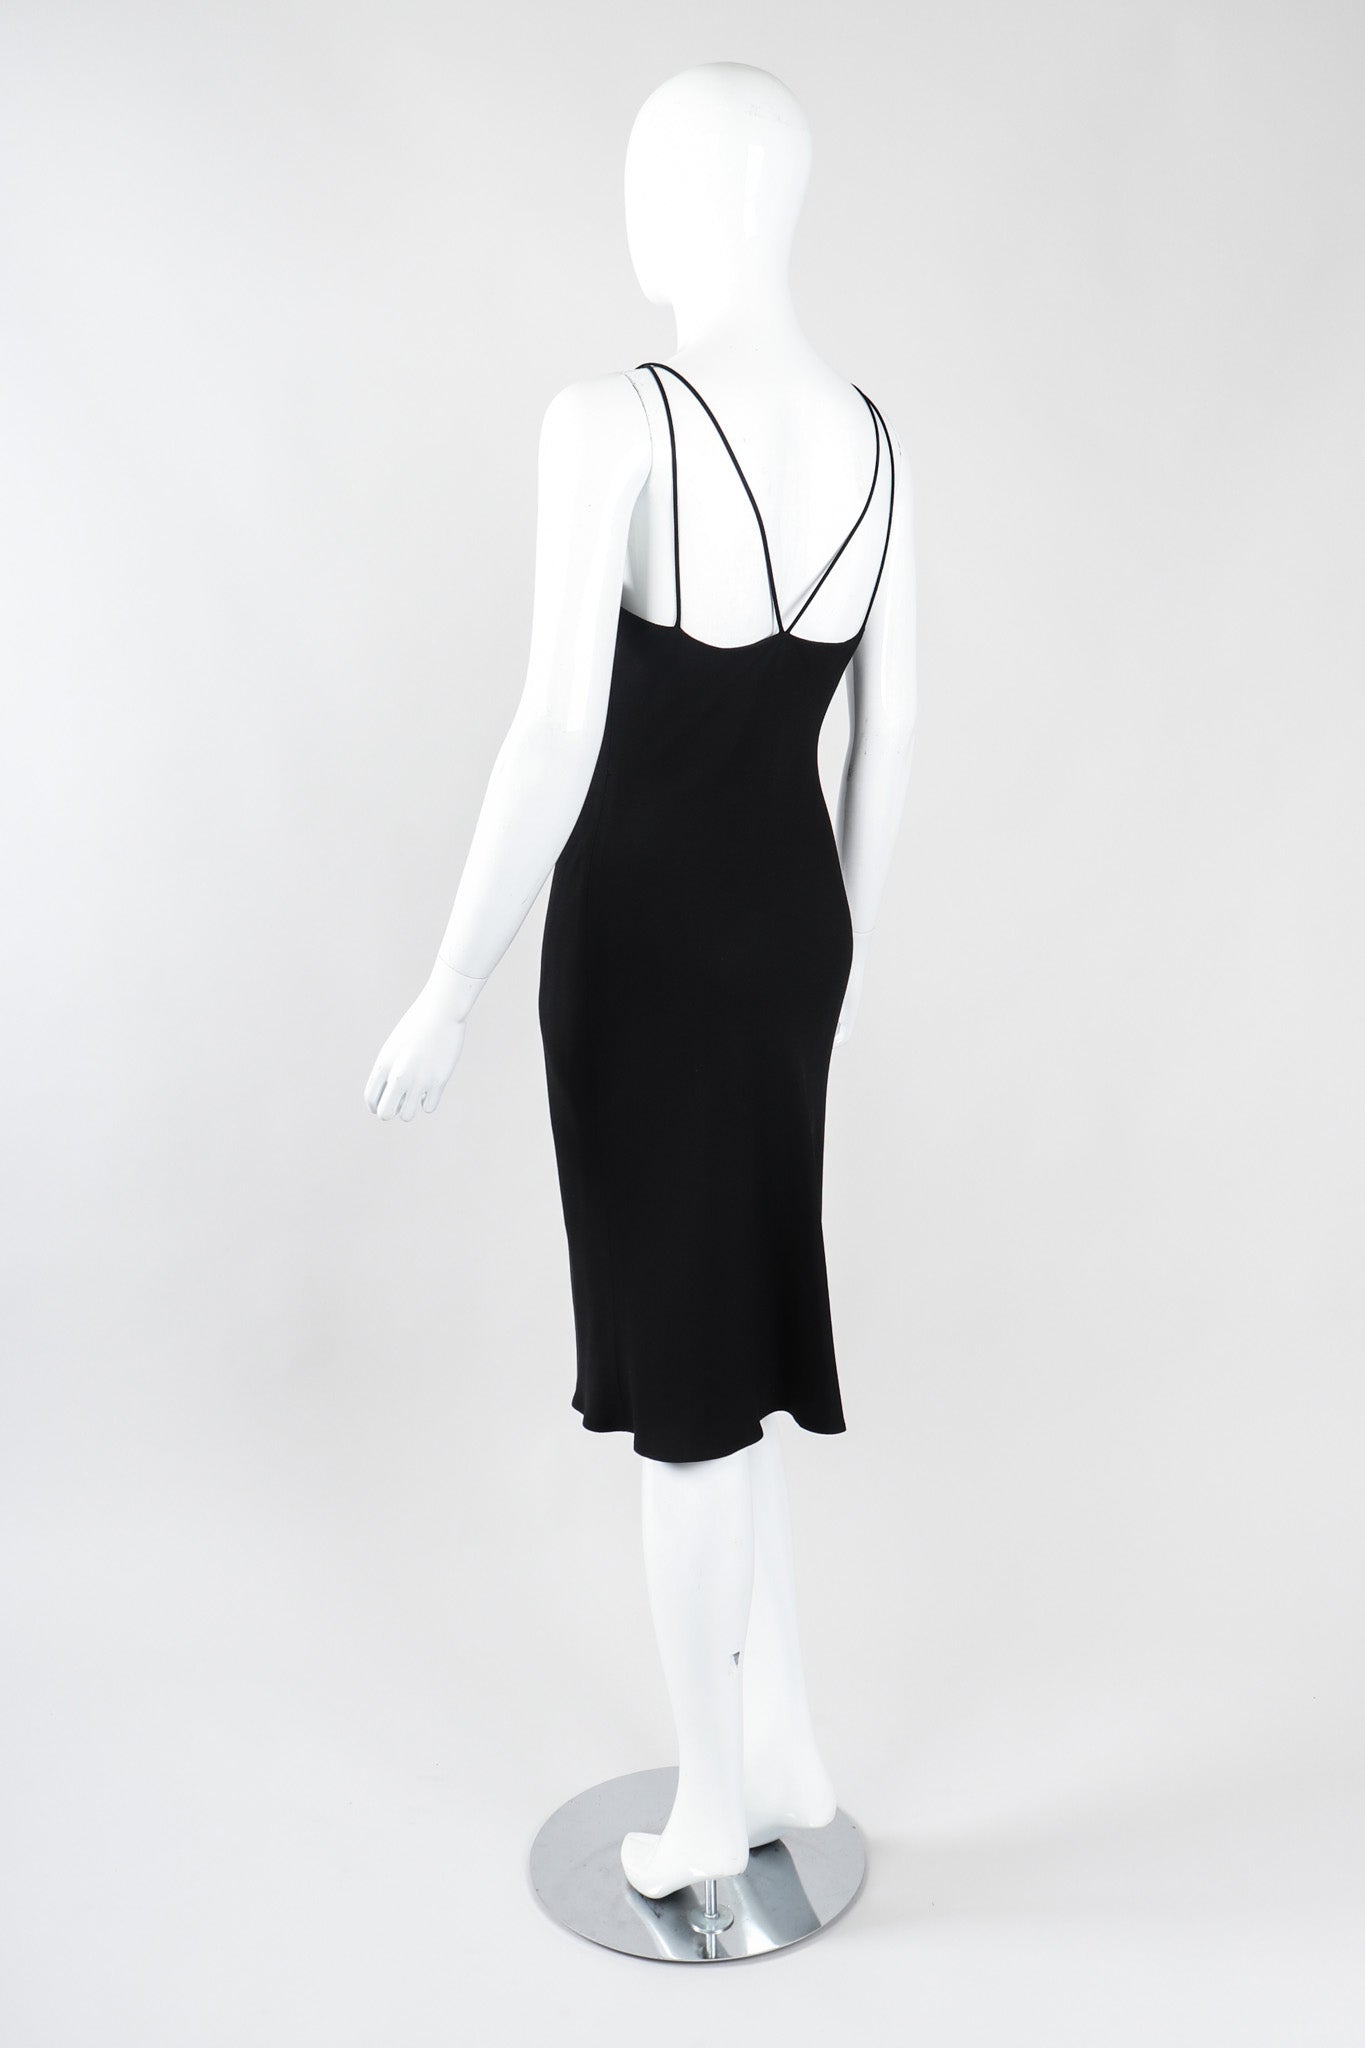 Recess Los Angeles Vintage Jasper Conran Strappy Minimal 90s Slip Dress